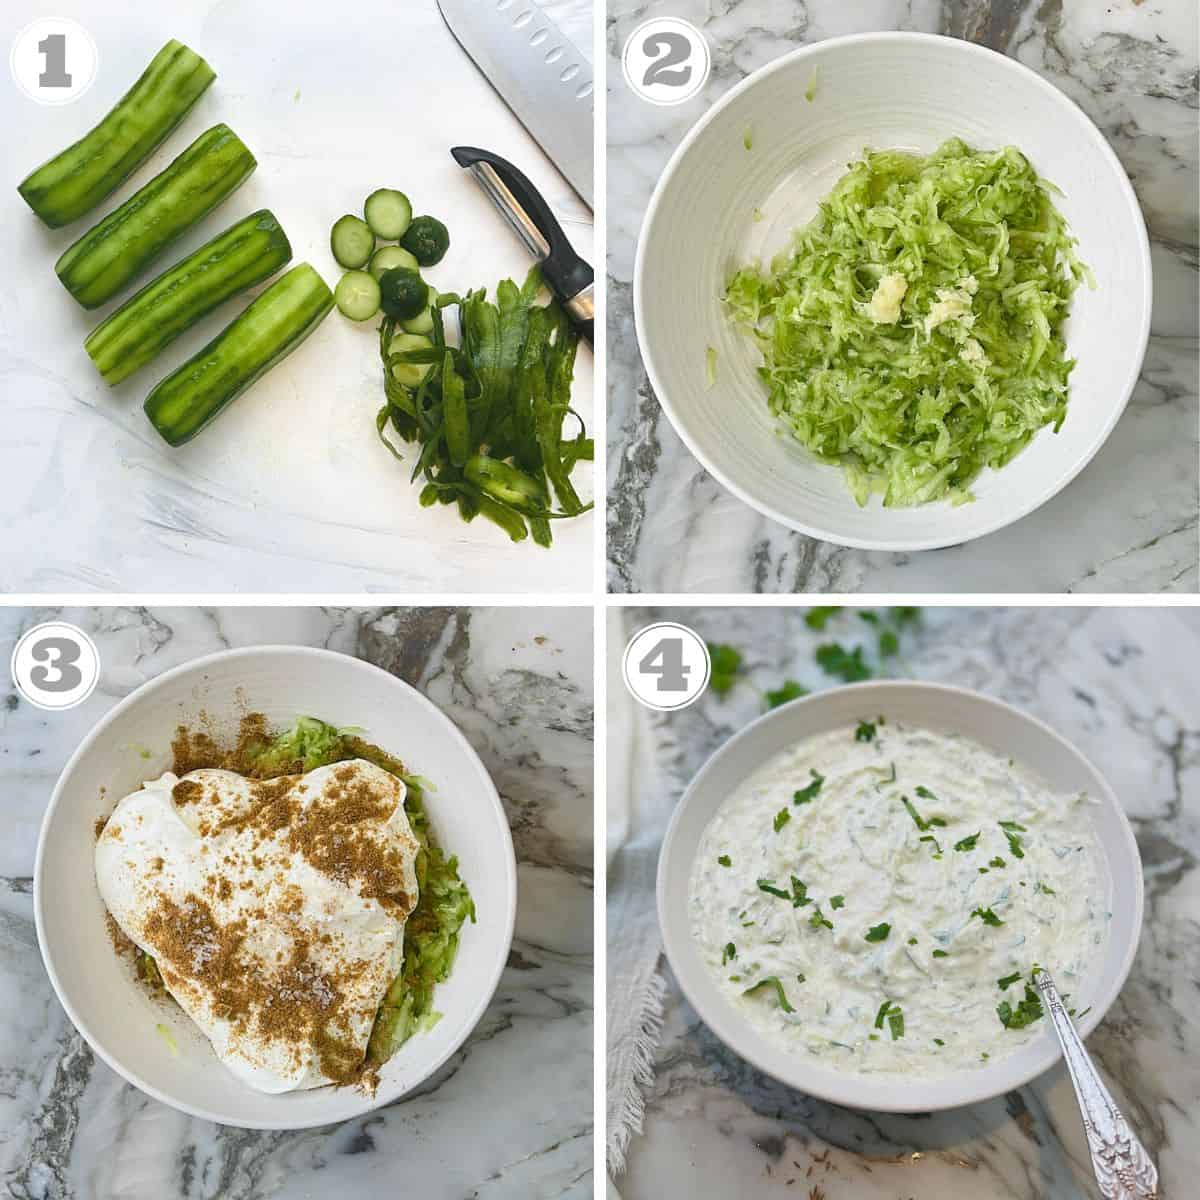 photos one through four showing steps to make cucumber raita 